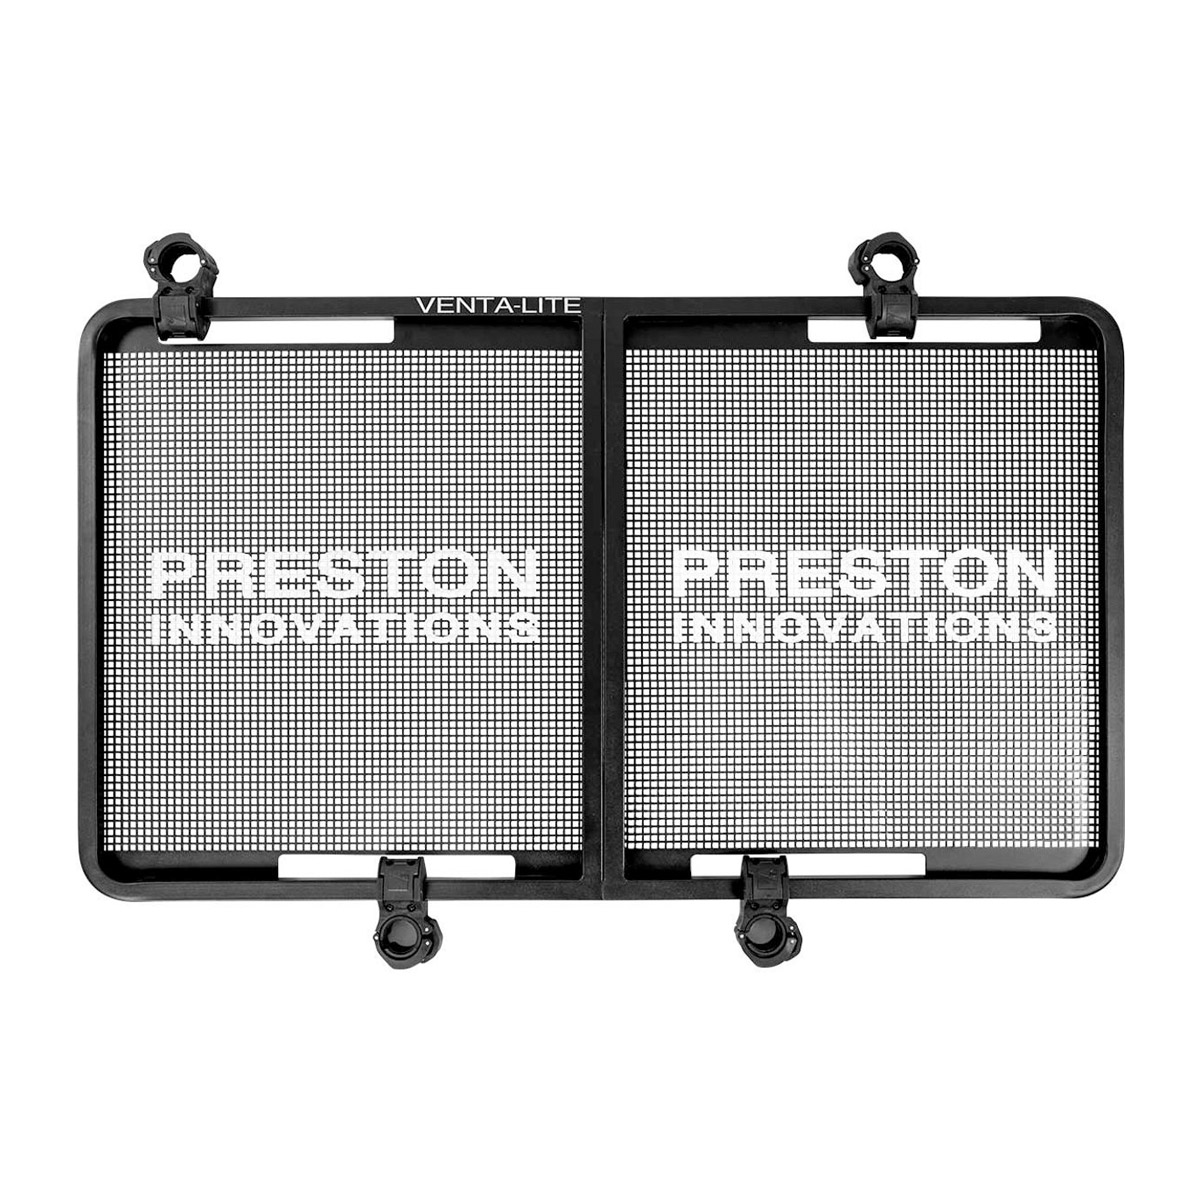 Preston Offbox 36 Venta-Lite Side Tray XL